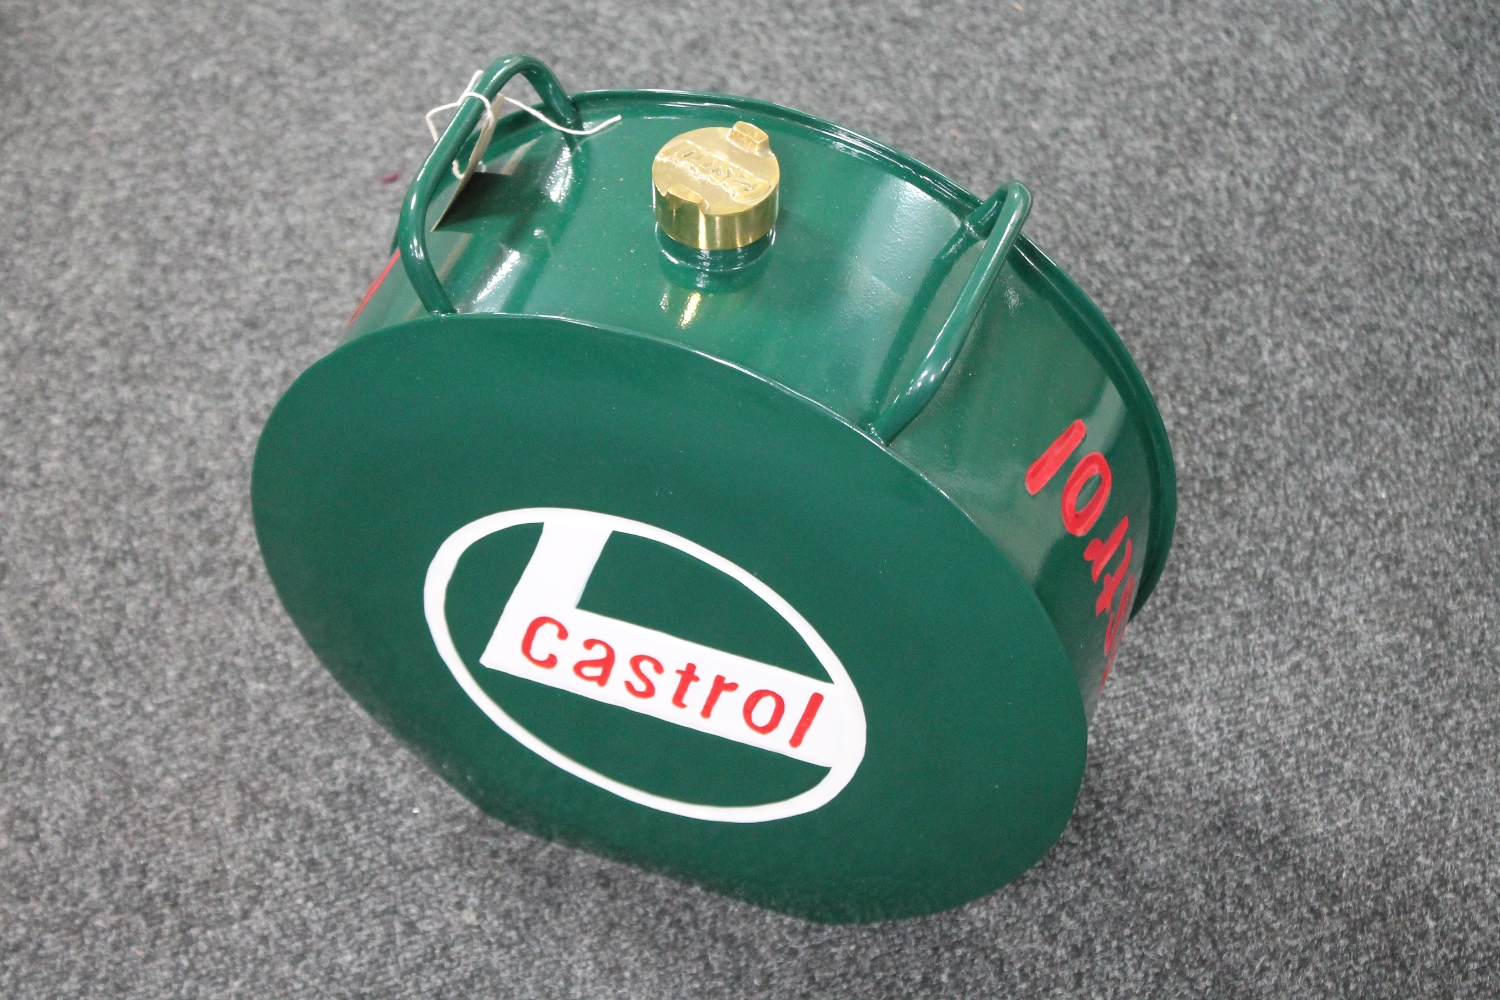 A cylindrical Castrol oil can